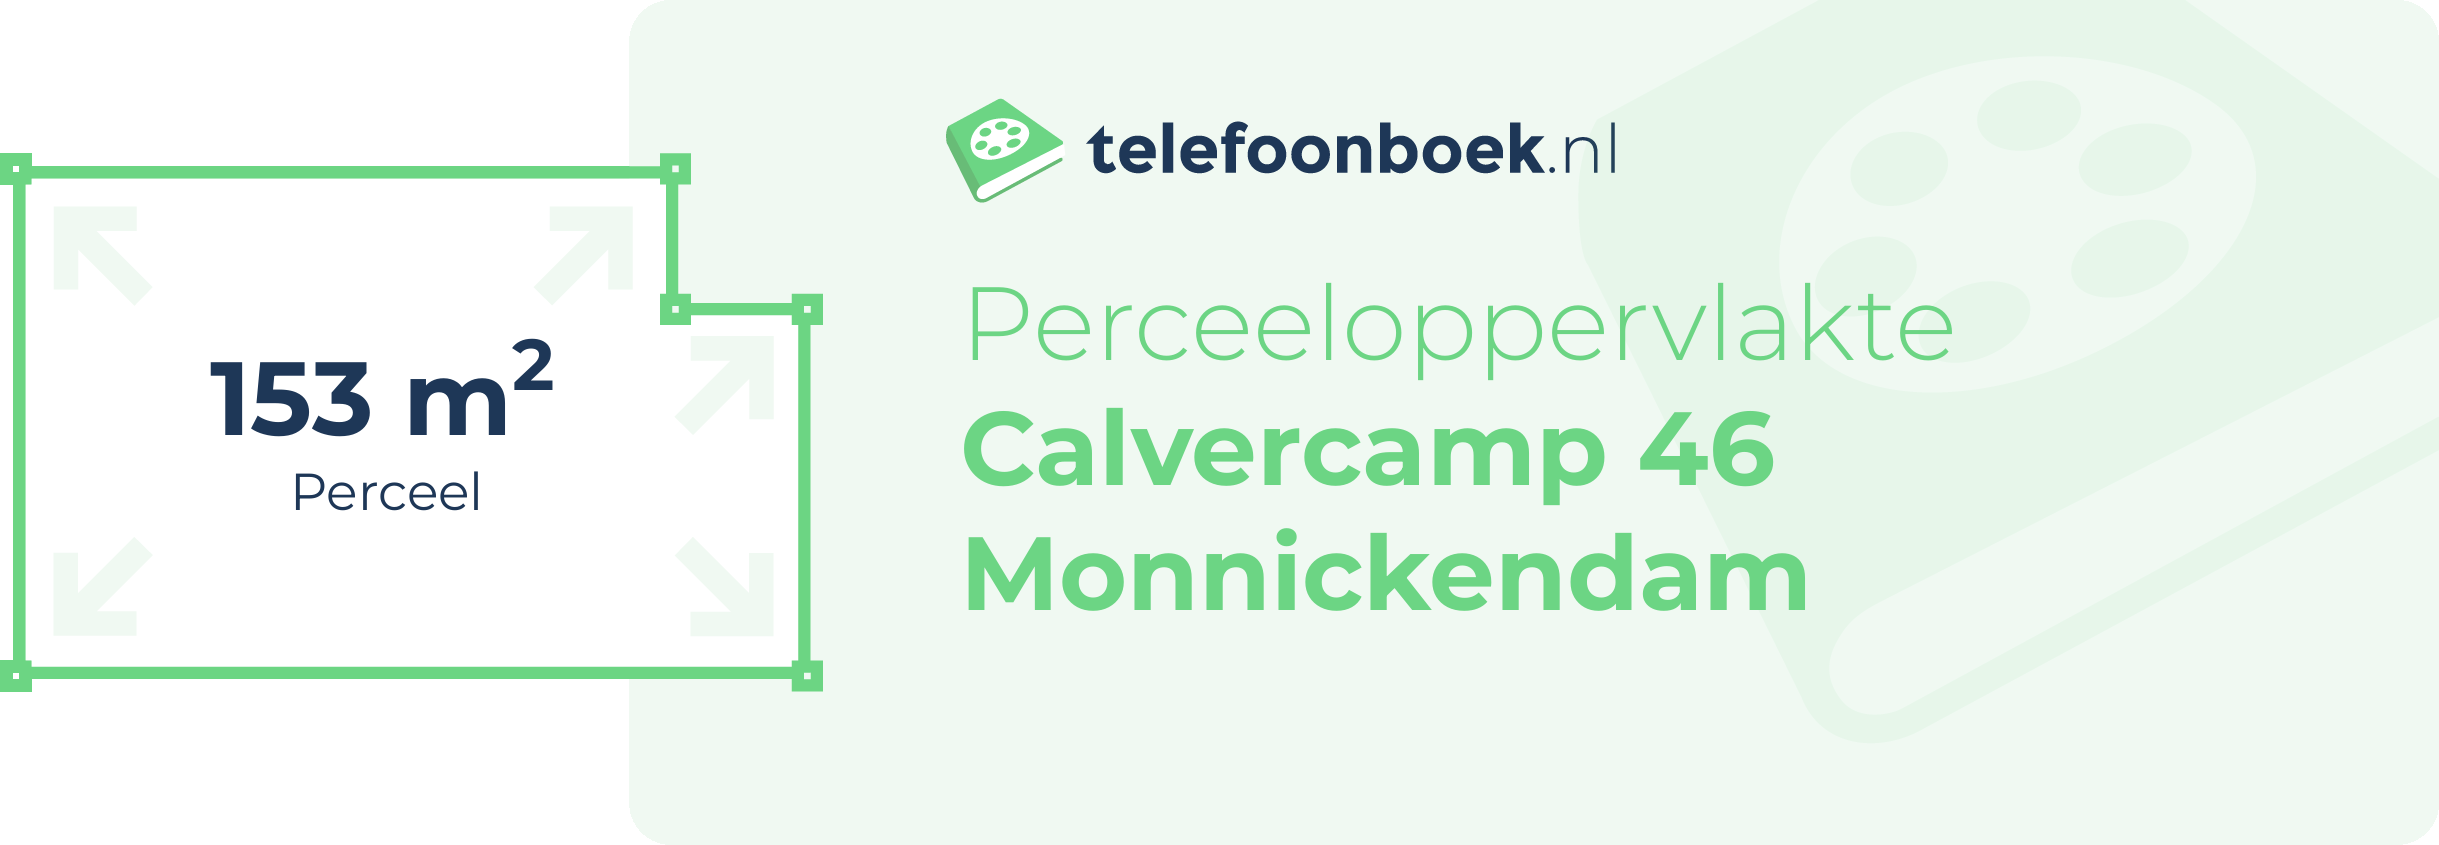 Perceeloppervlakte Calvercamp 46 Monnickendam